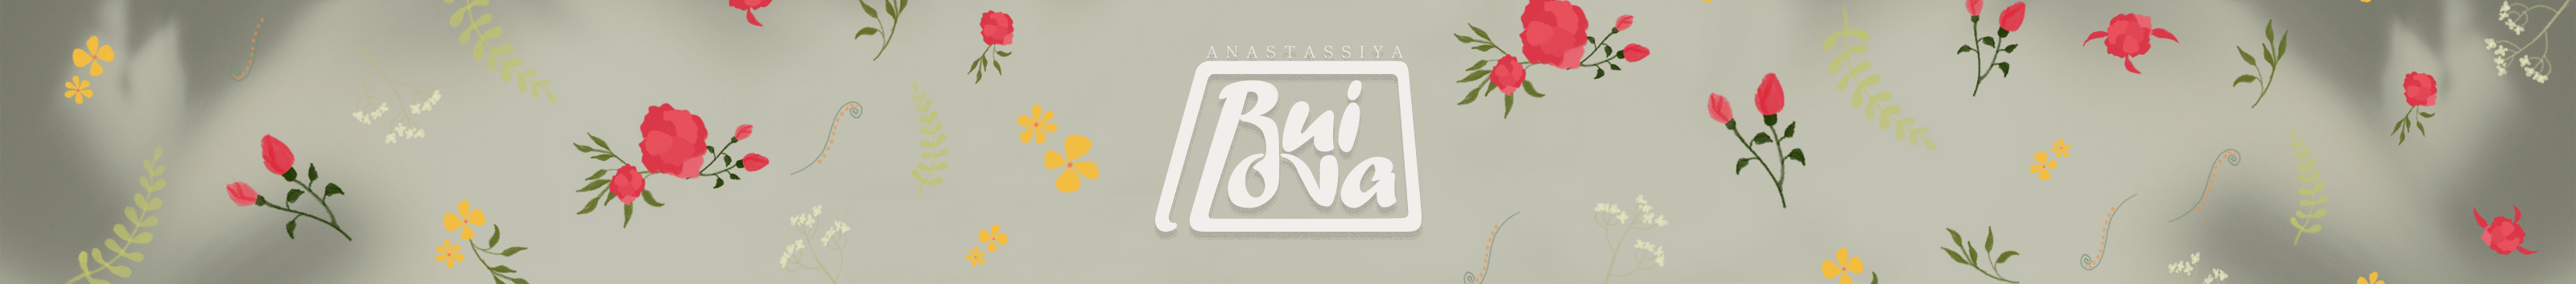 Anastassiya Builovas profilbanner